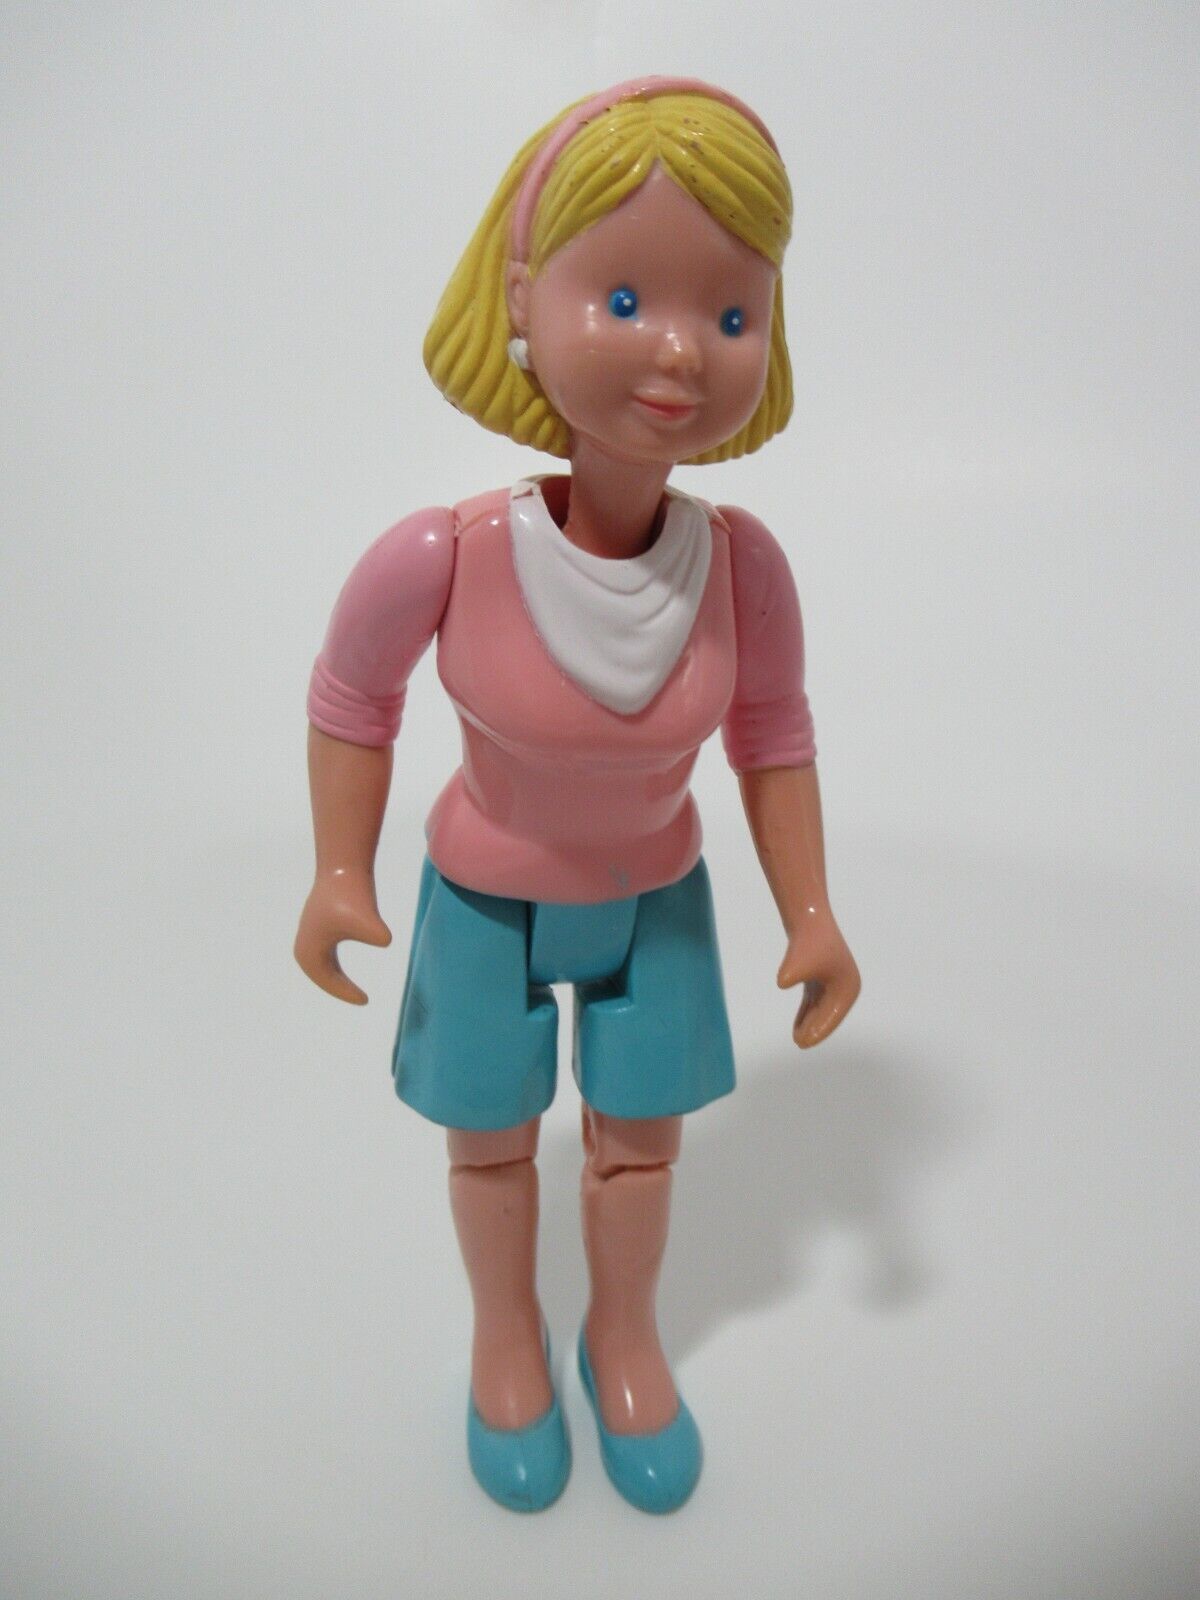 Fisher Price Loving Family Dream Dollhouse RV Mom blonde pink blue shorts - $10.39